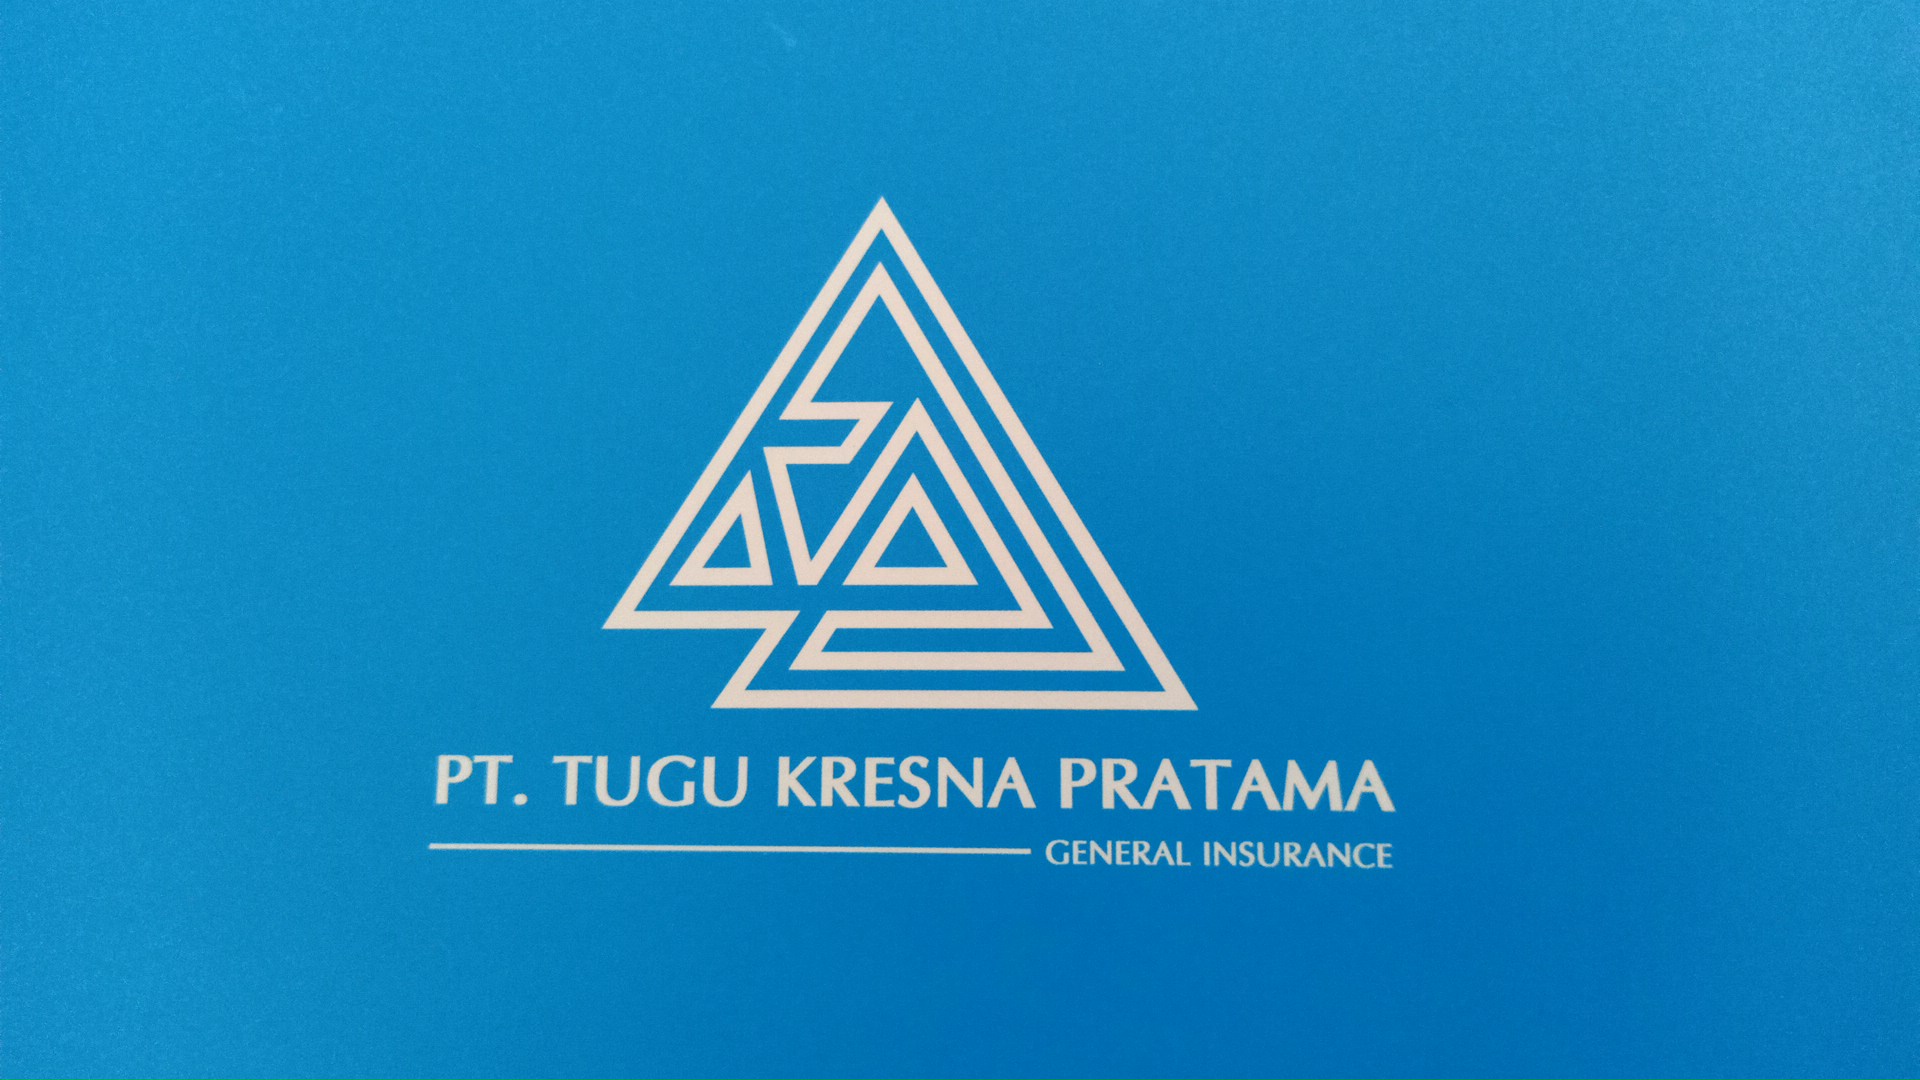 Pt. Asuransi Tugu Kresna Pratama Photo